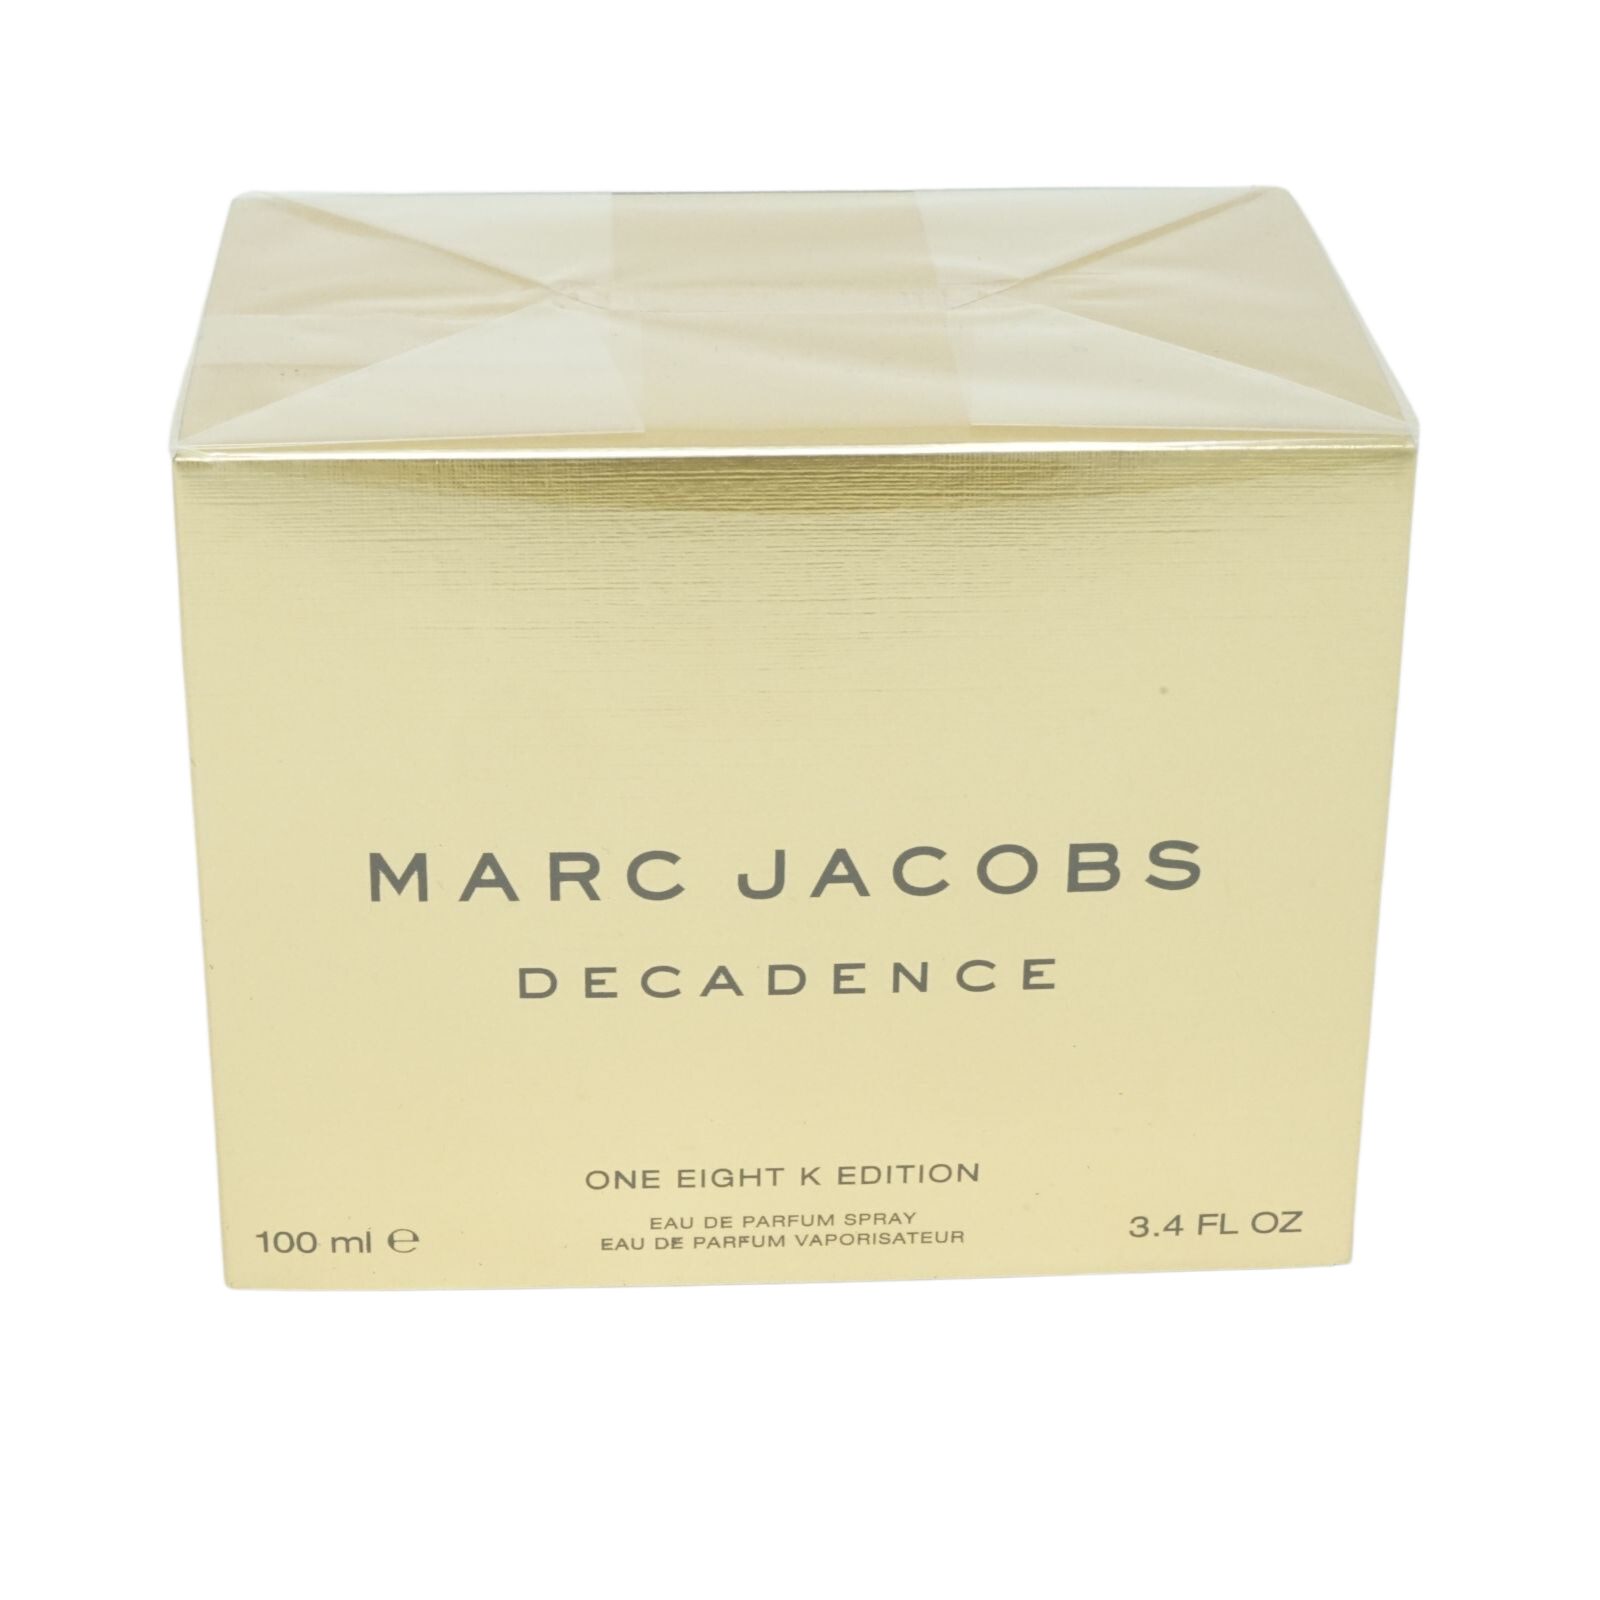 MARC JACOBS Eau Marc Spray Parfum One Edition Decadence de Jacobs Eau eight K 100ml de parfum